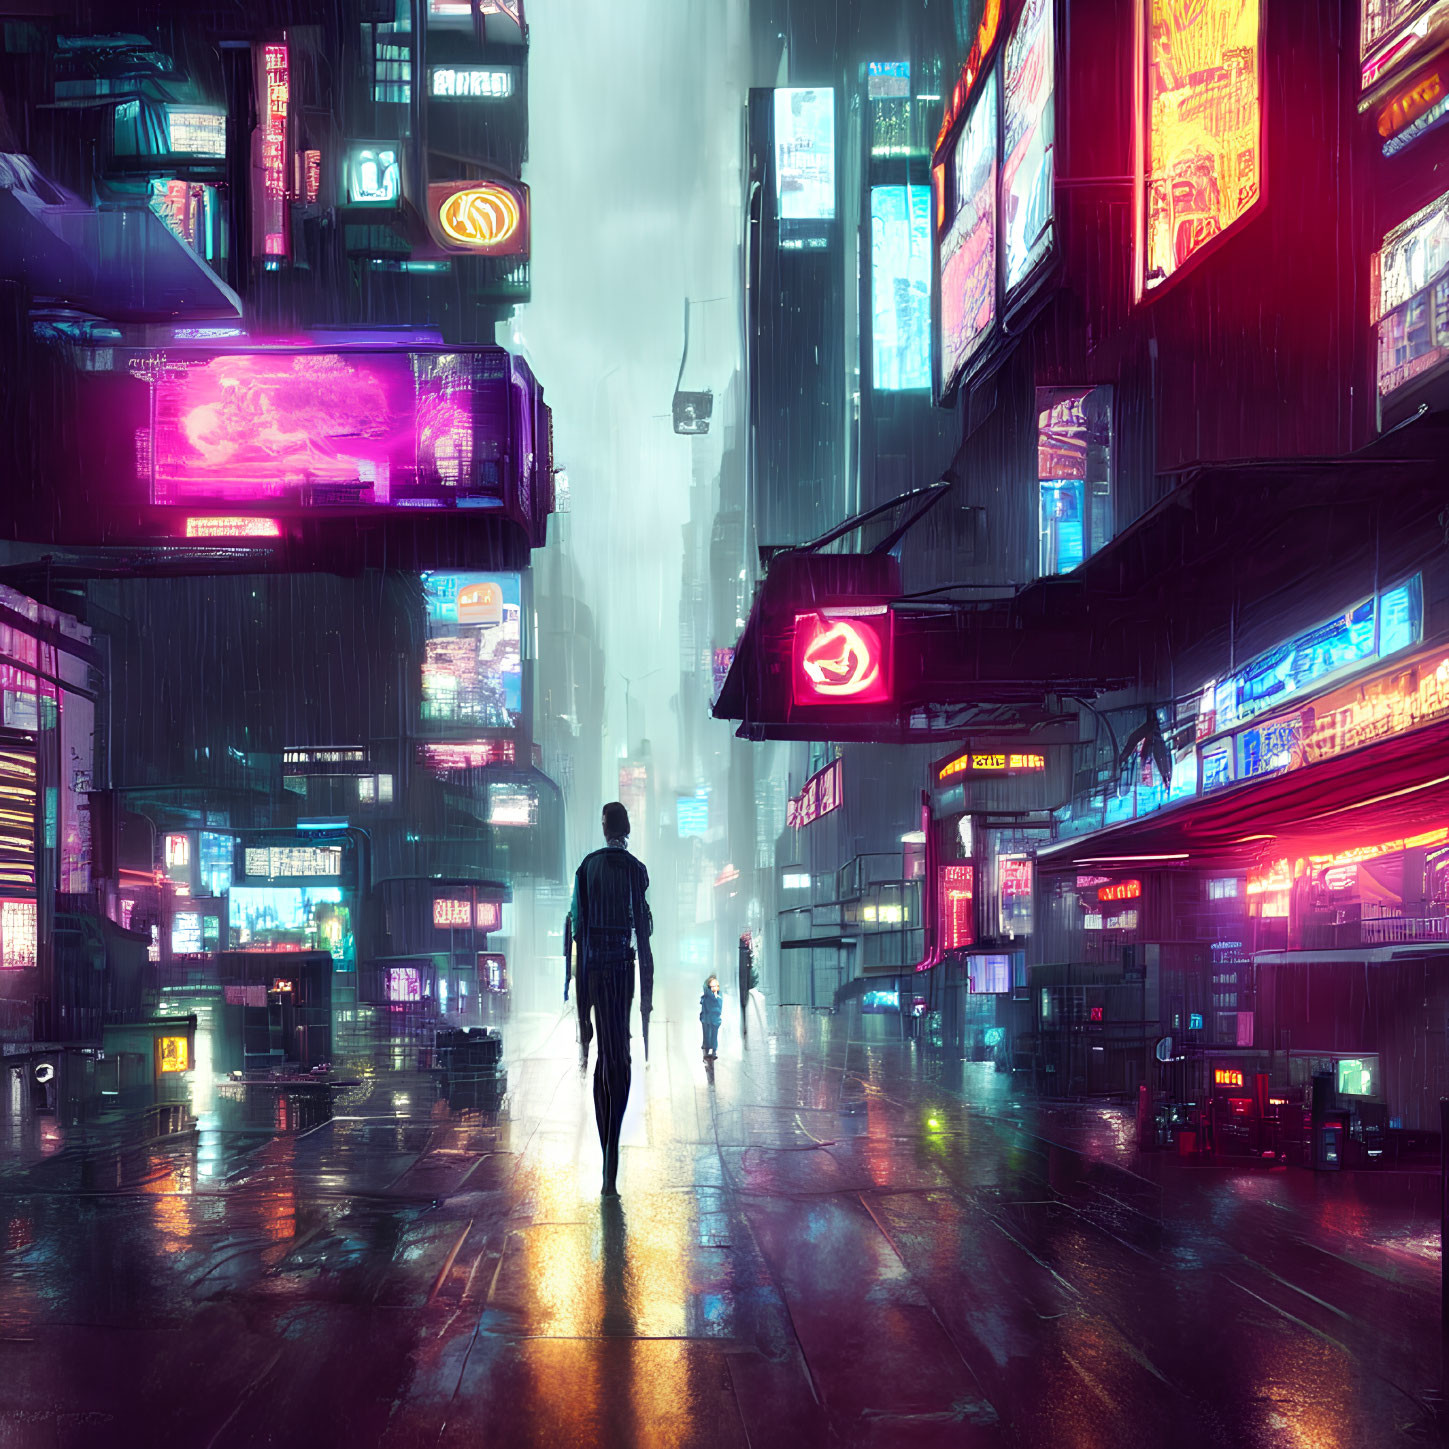 Futuristic neon-lit city street with rain reflections